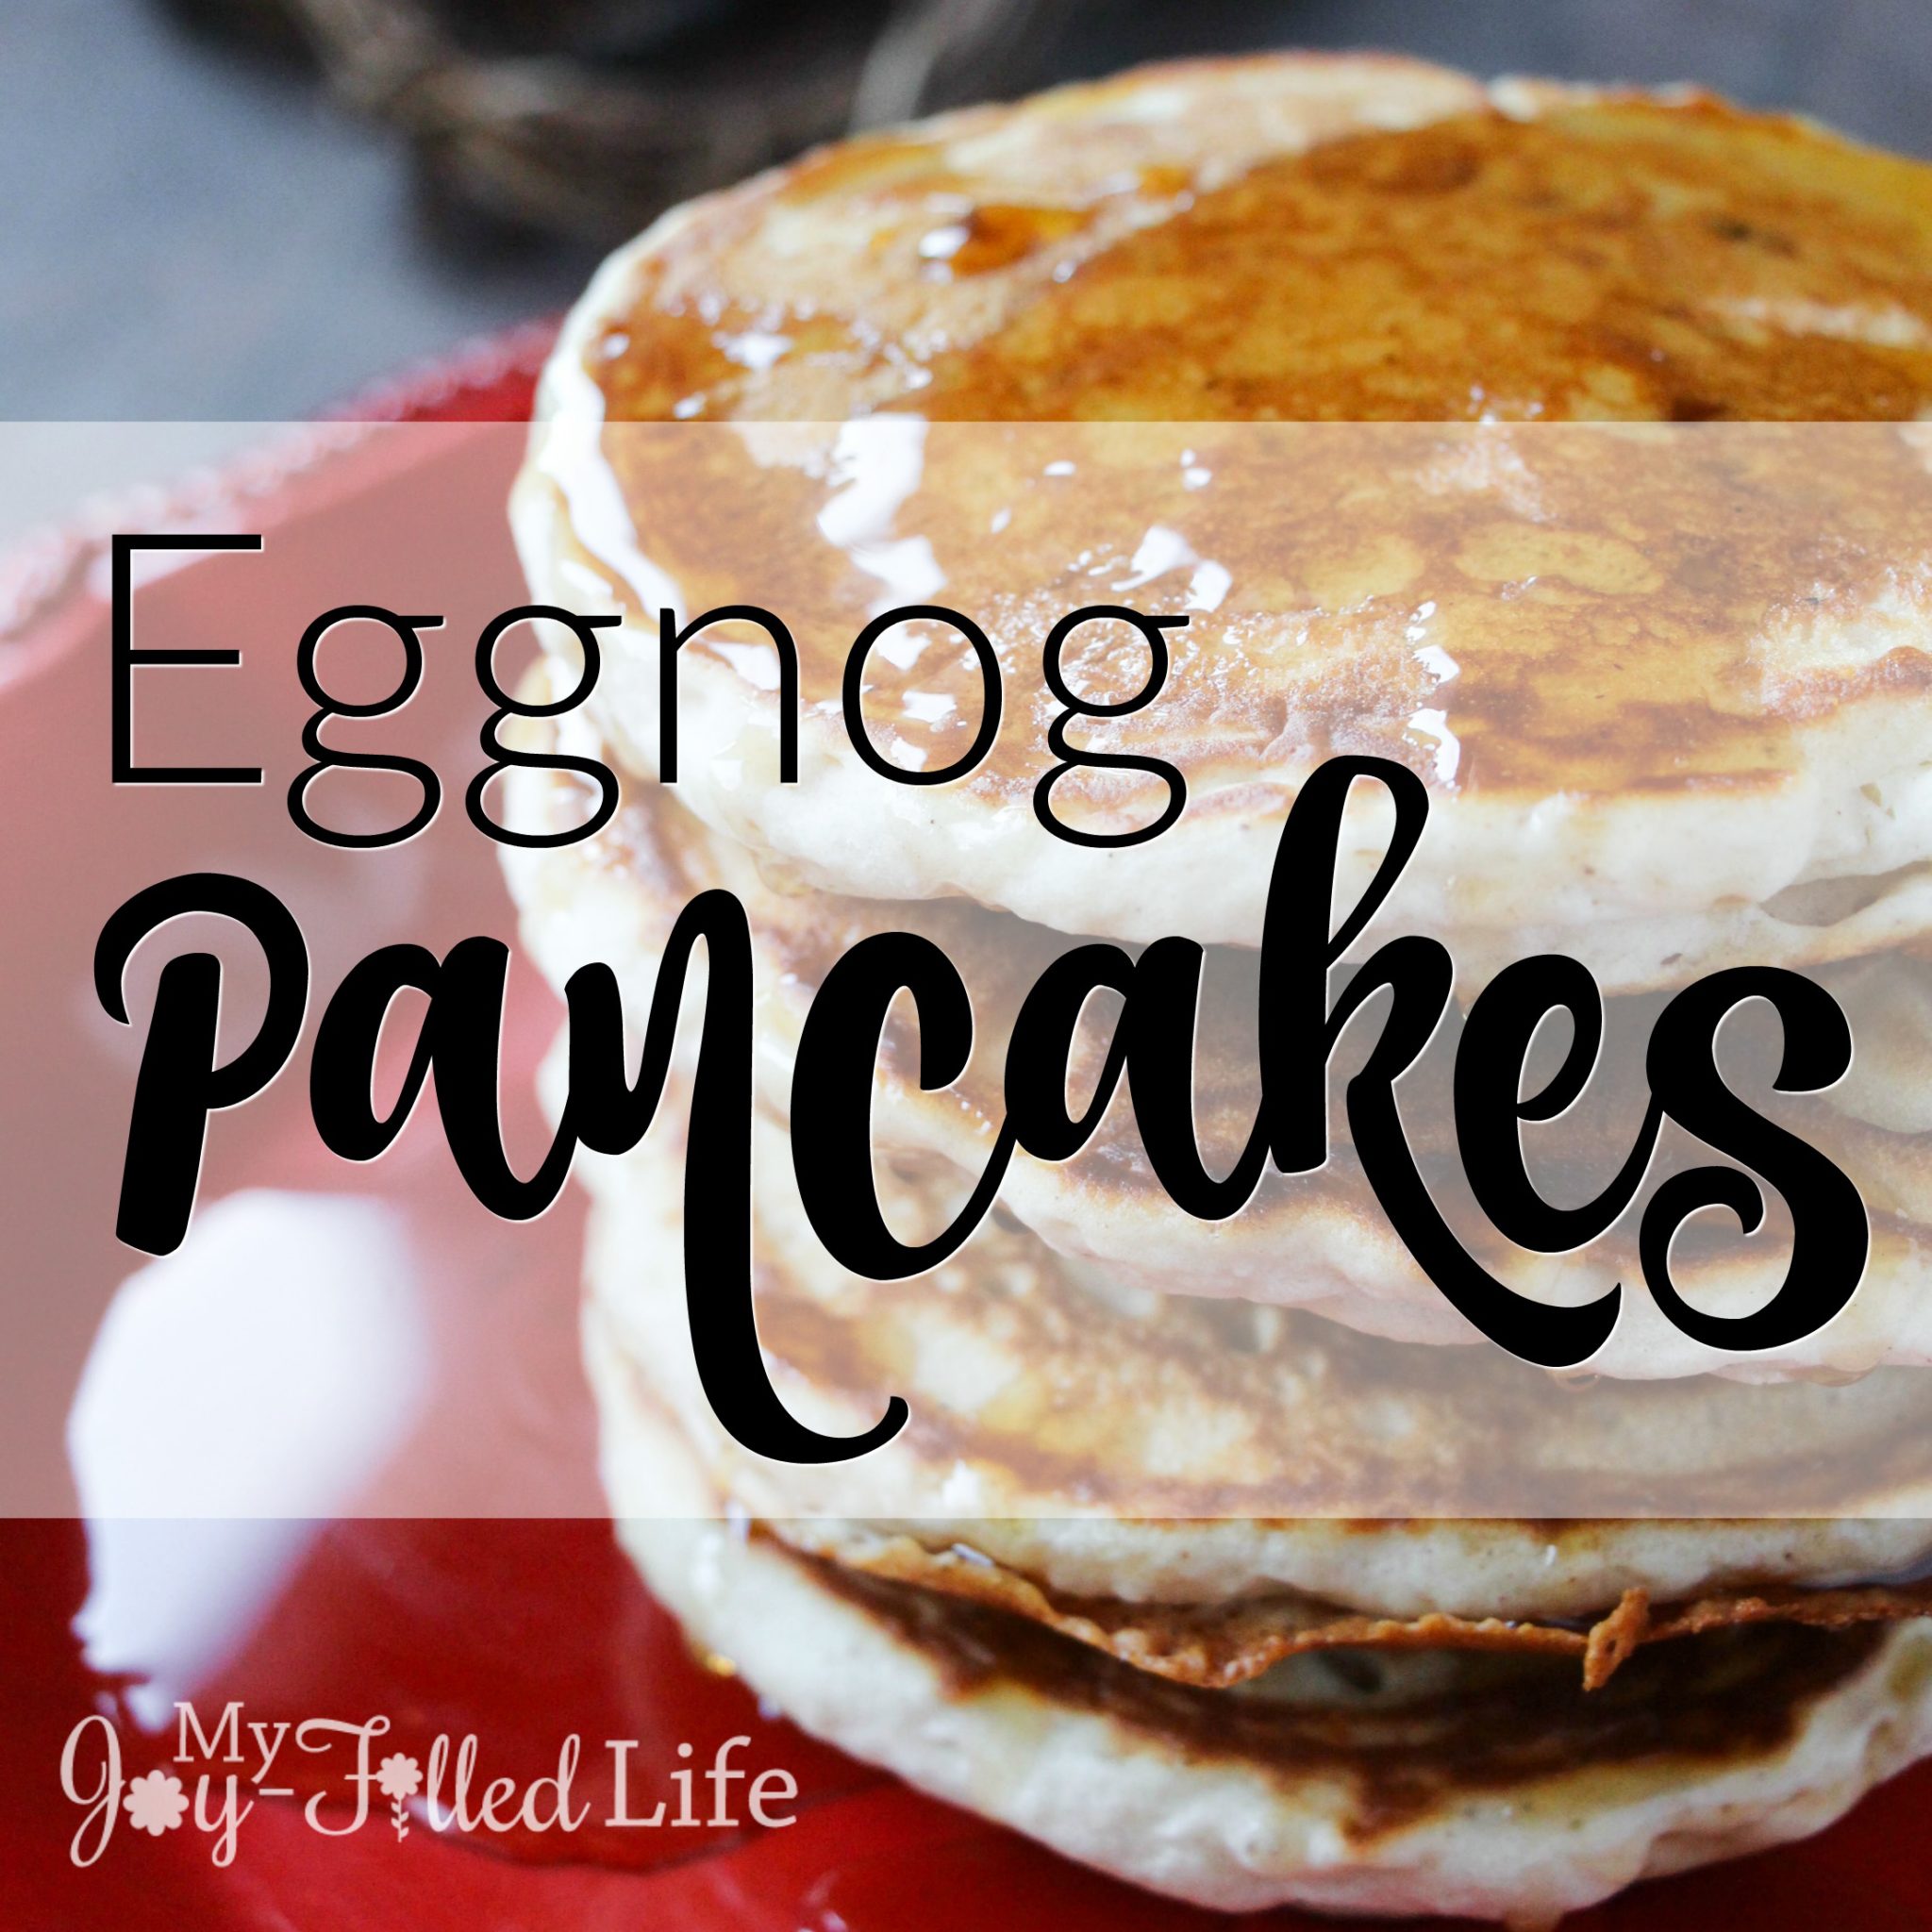 eggnog-pancakes-square